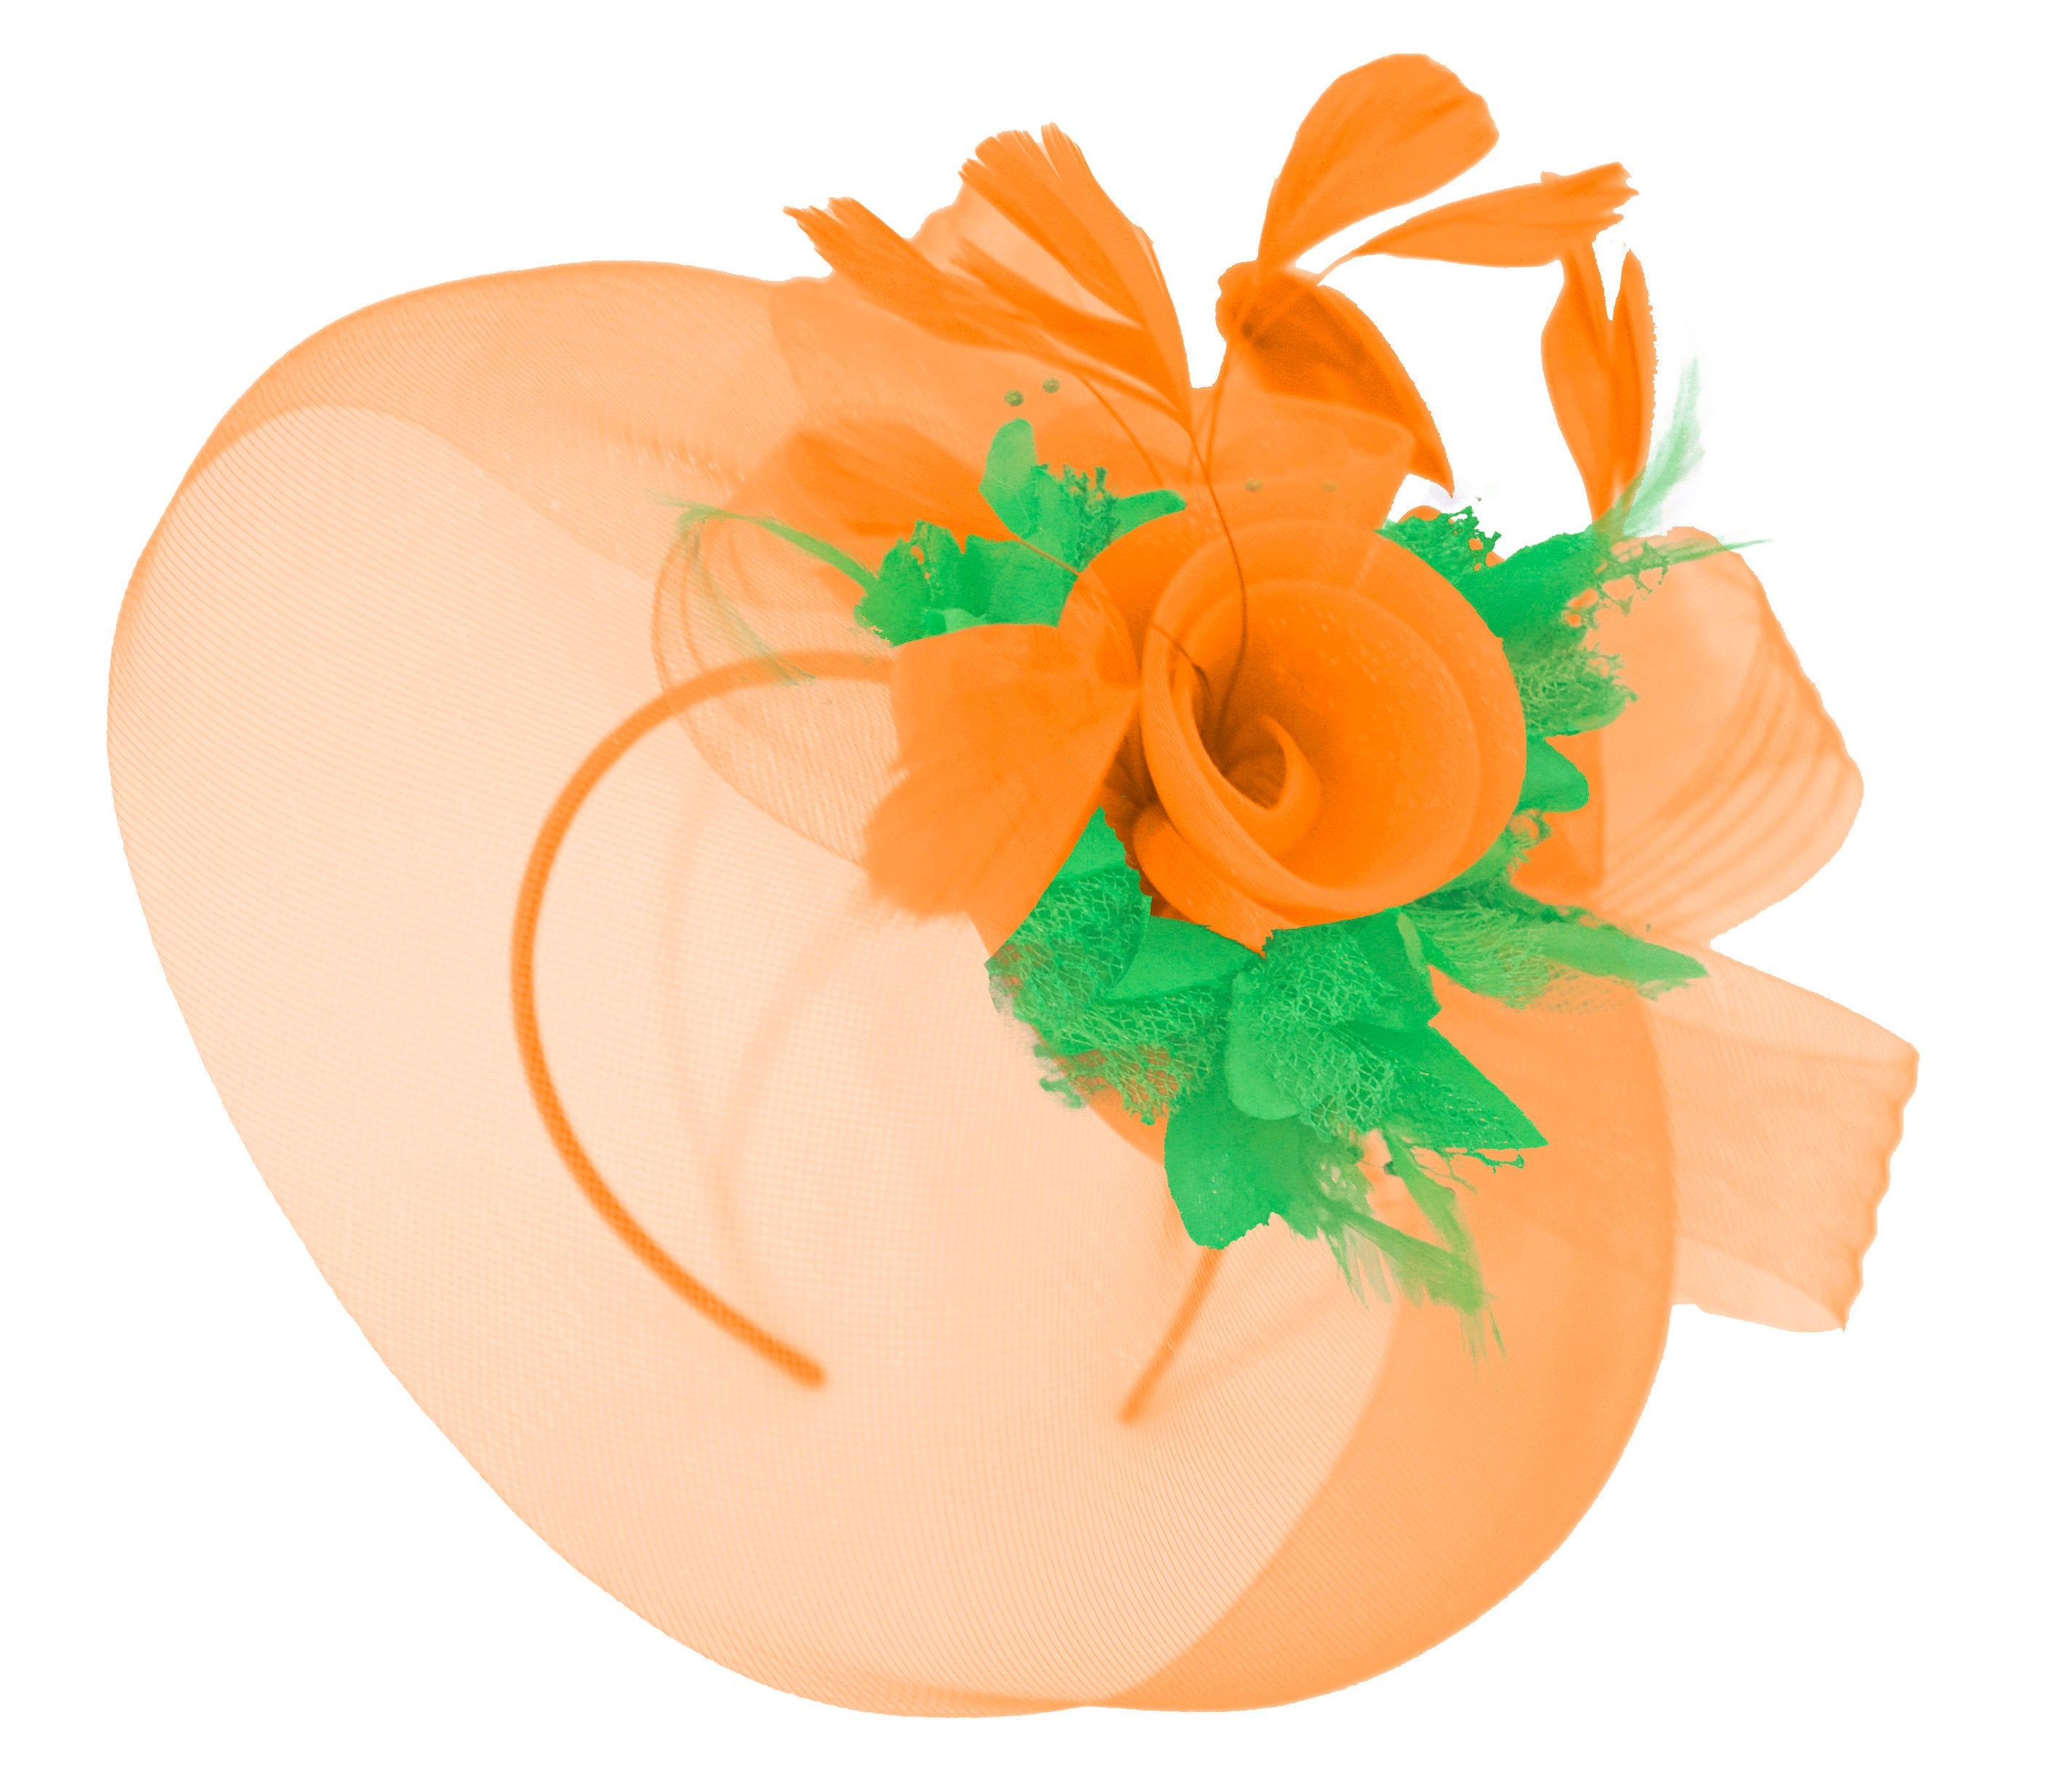 Caprilite Orange and Grass Green Fascinator Hat Veil Net Hair Clip Ascot Derby Races Wedding Headband Feather Flower